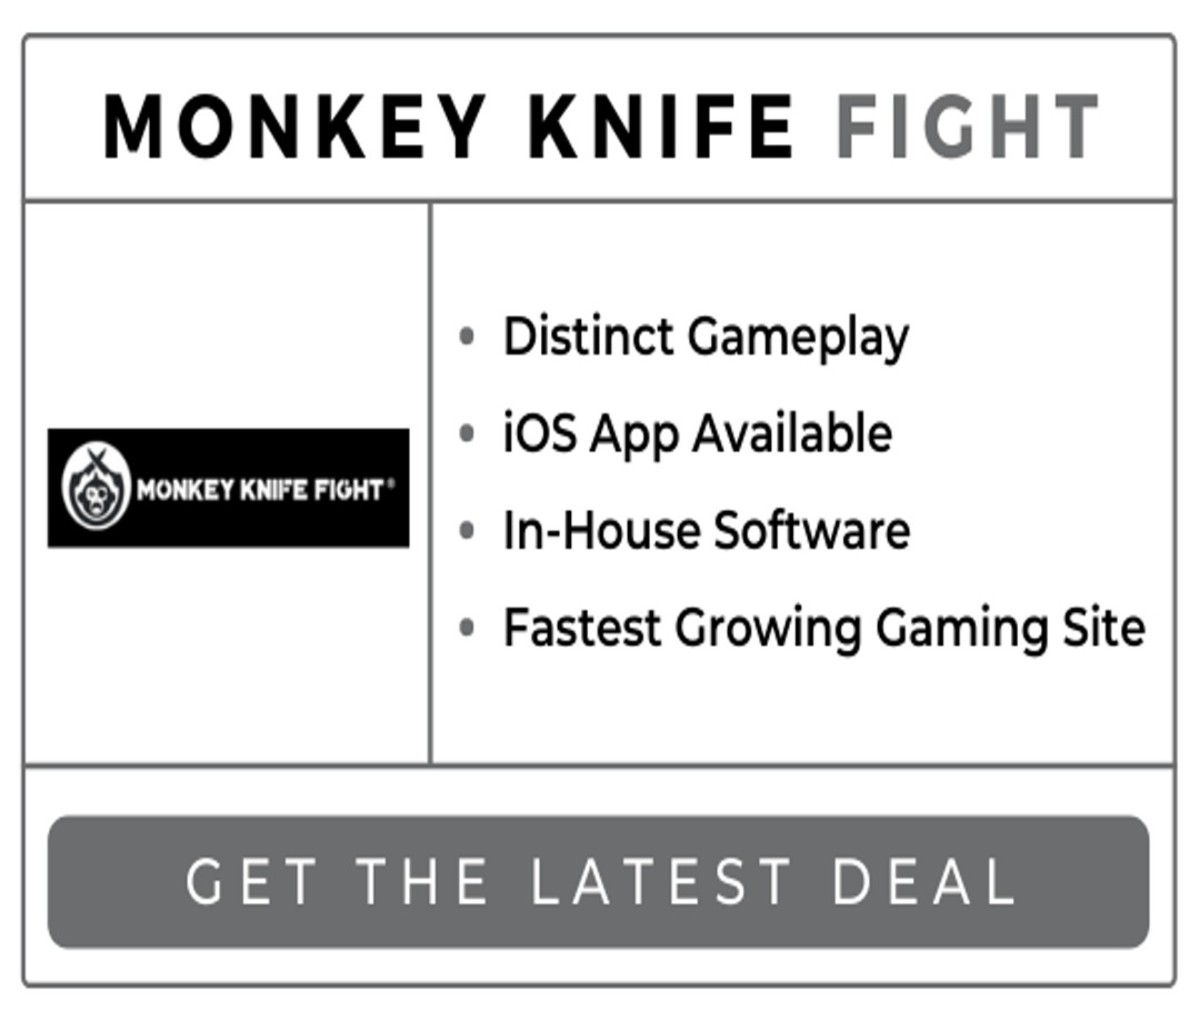 Monkey Knife Fight - Most Famous For Progressive Slots